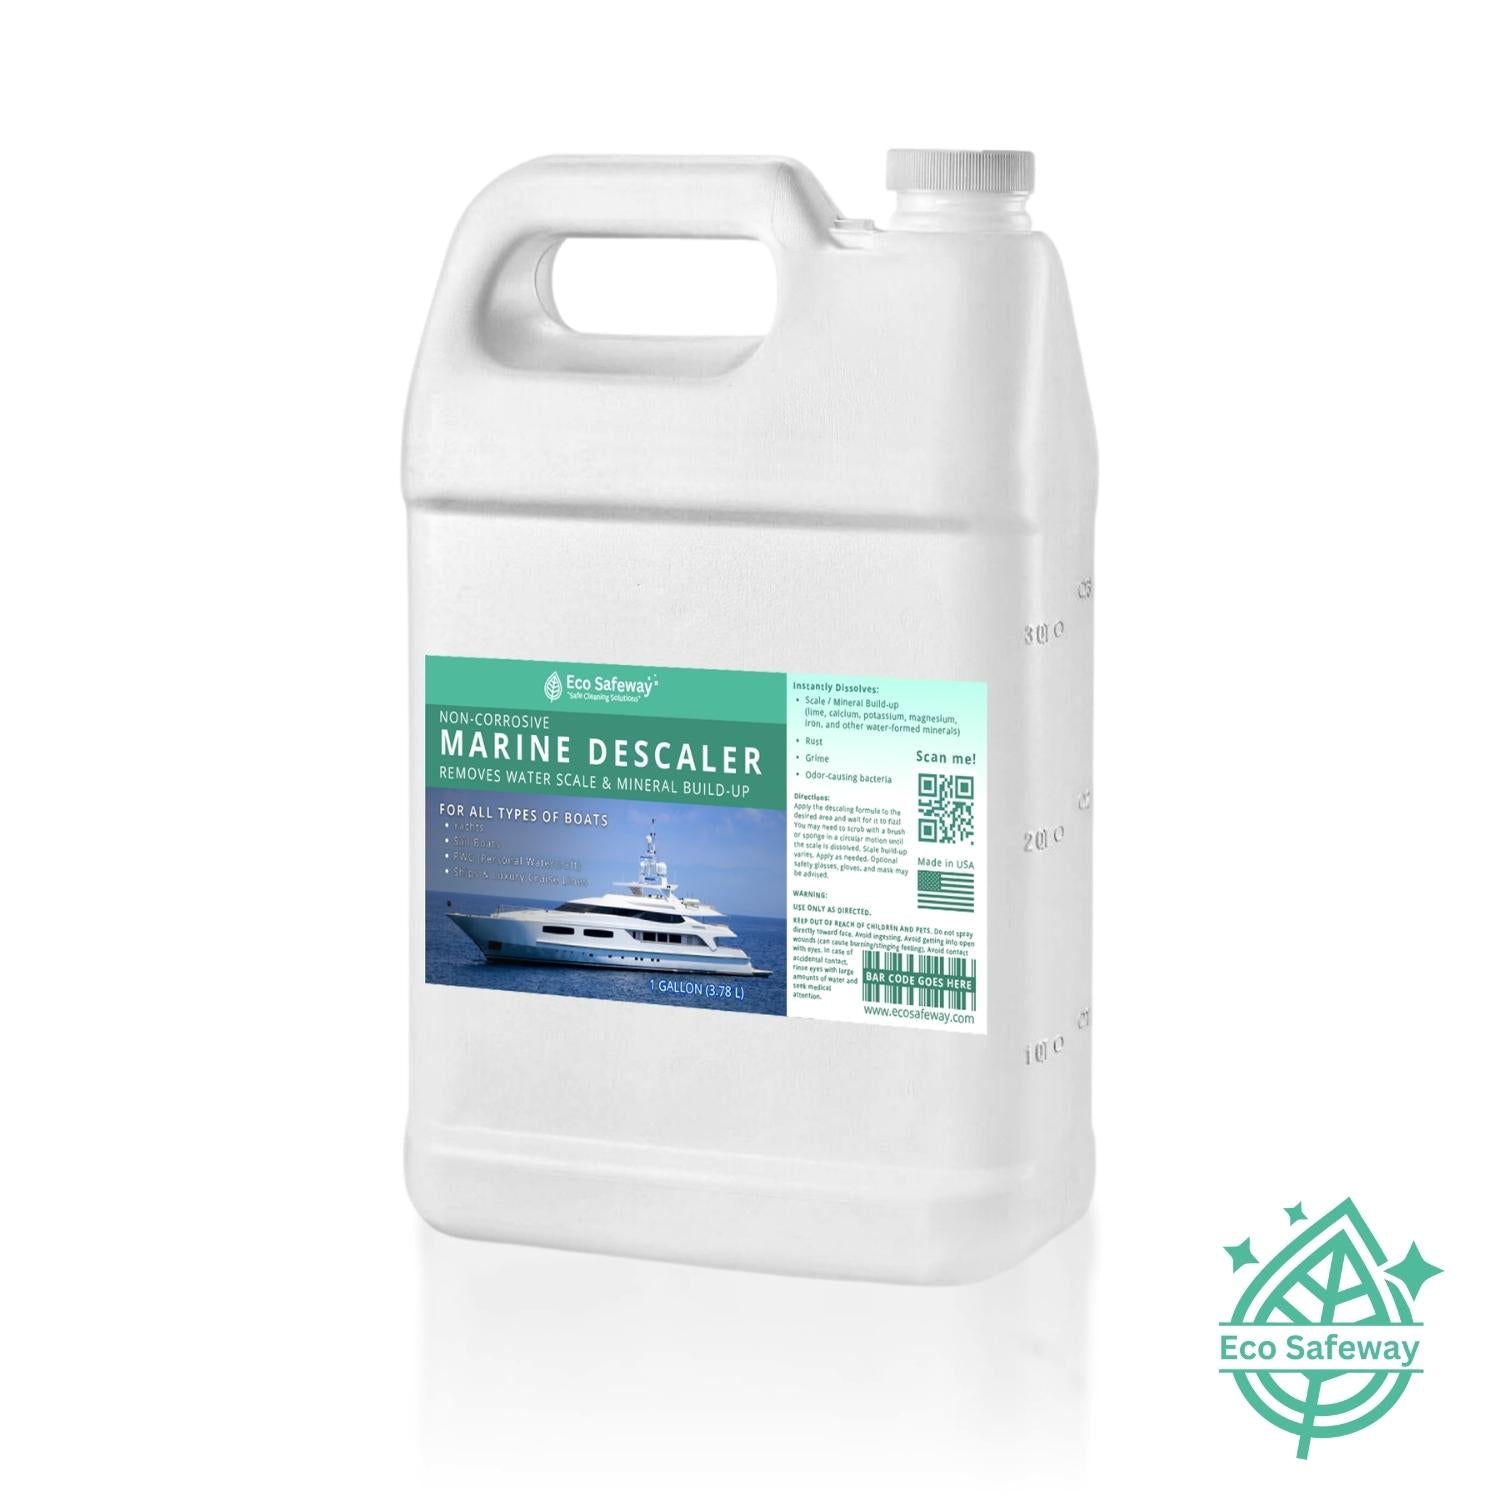 Marine_Descaler_Eco_Safeway_1_Gallon_Noncorrosive_cleaning_supplies